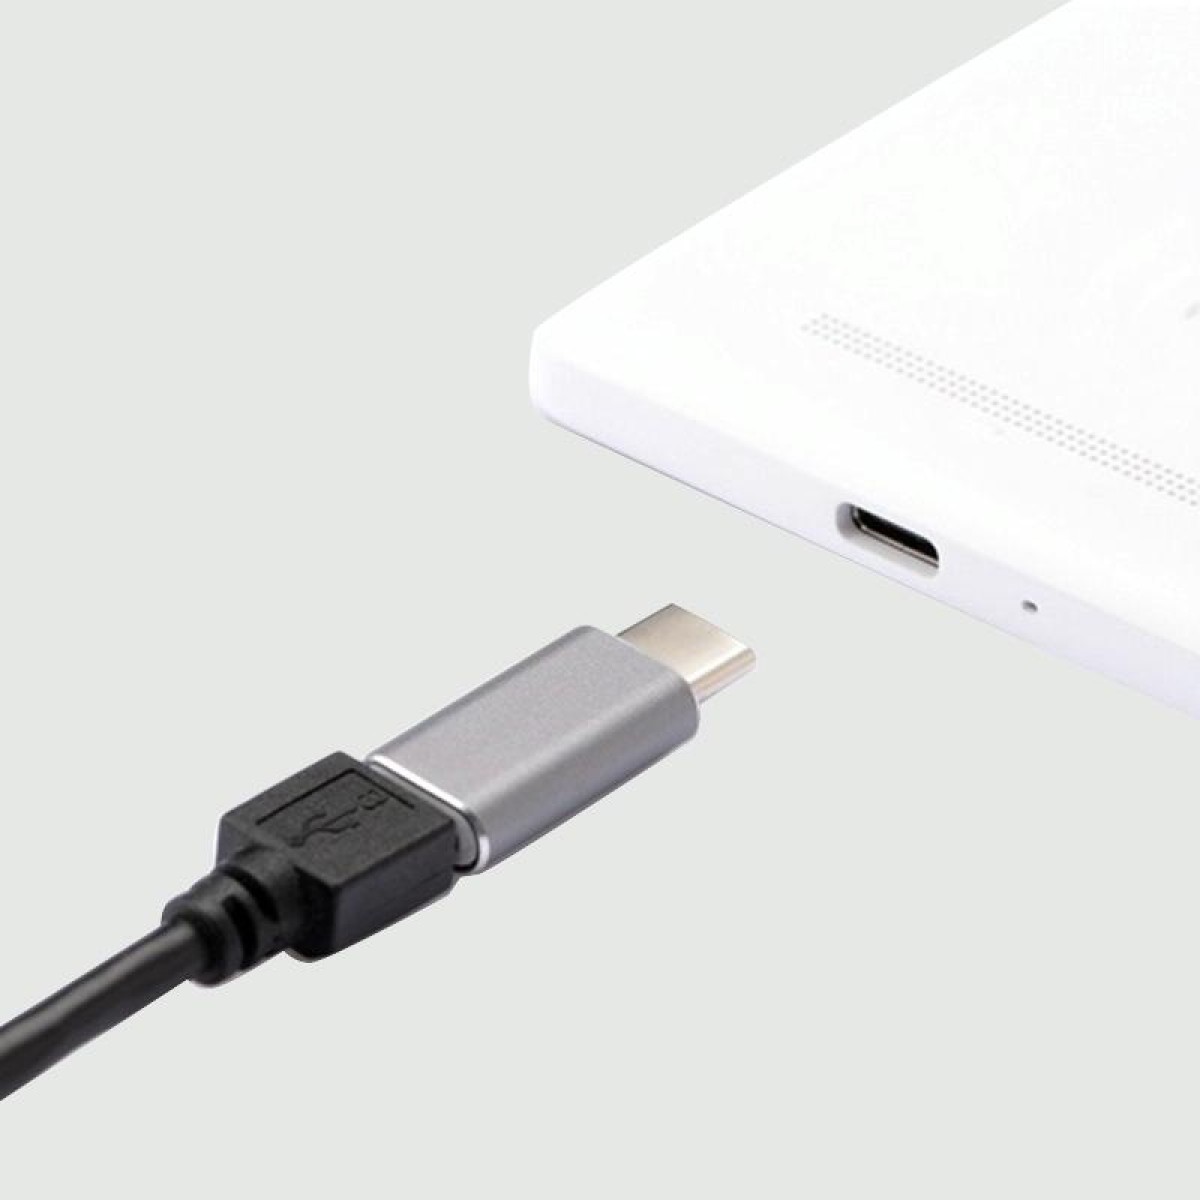 Aluminum Micro USB to USB 3.1 Type-C Converter Adapter(Grey)